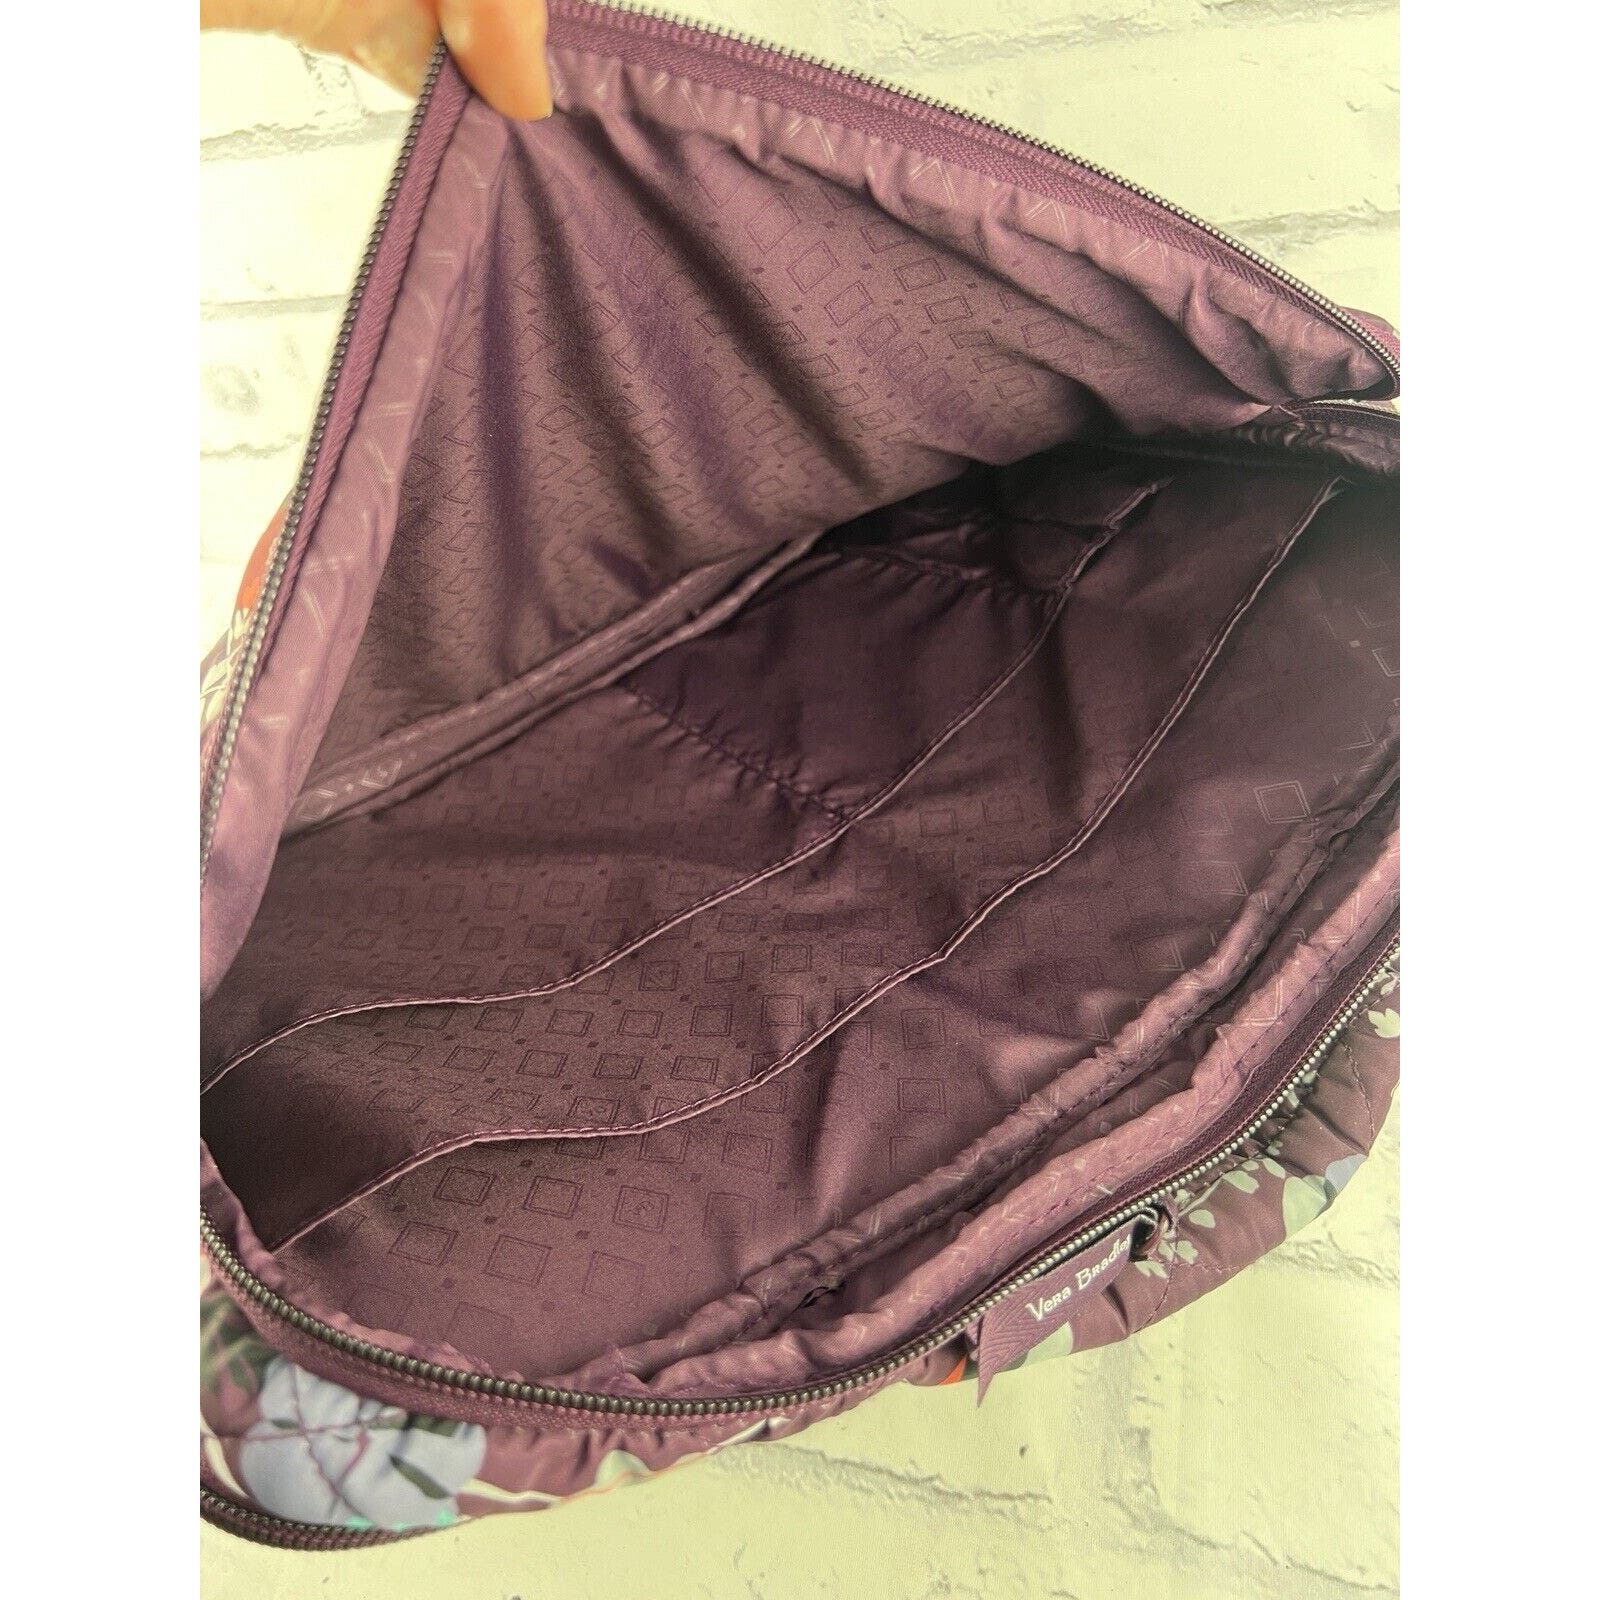 Vera Bradley Laptop Portfolio Crossbody Bag 16”x11” Purple Floral Flowers Handle